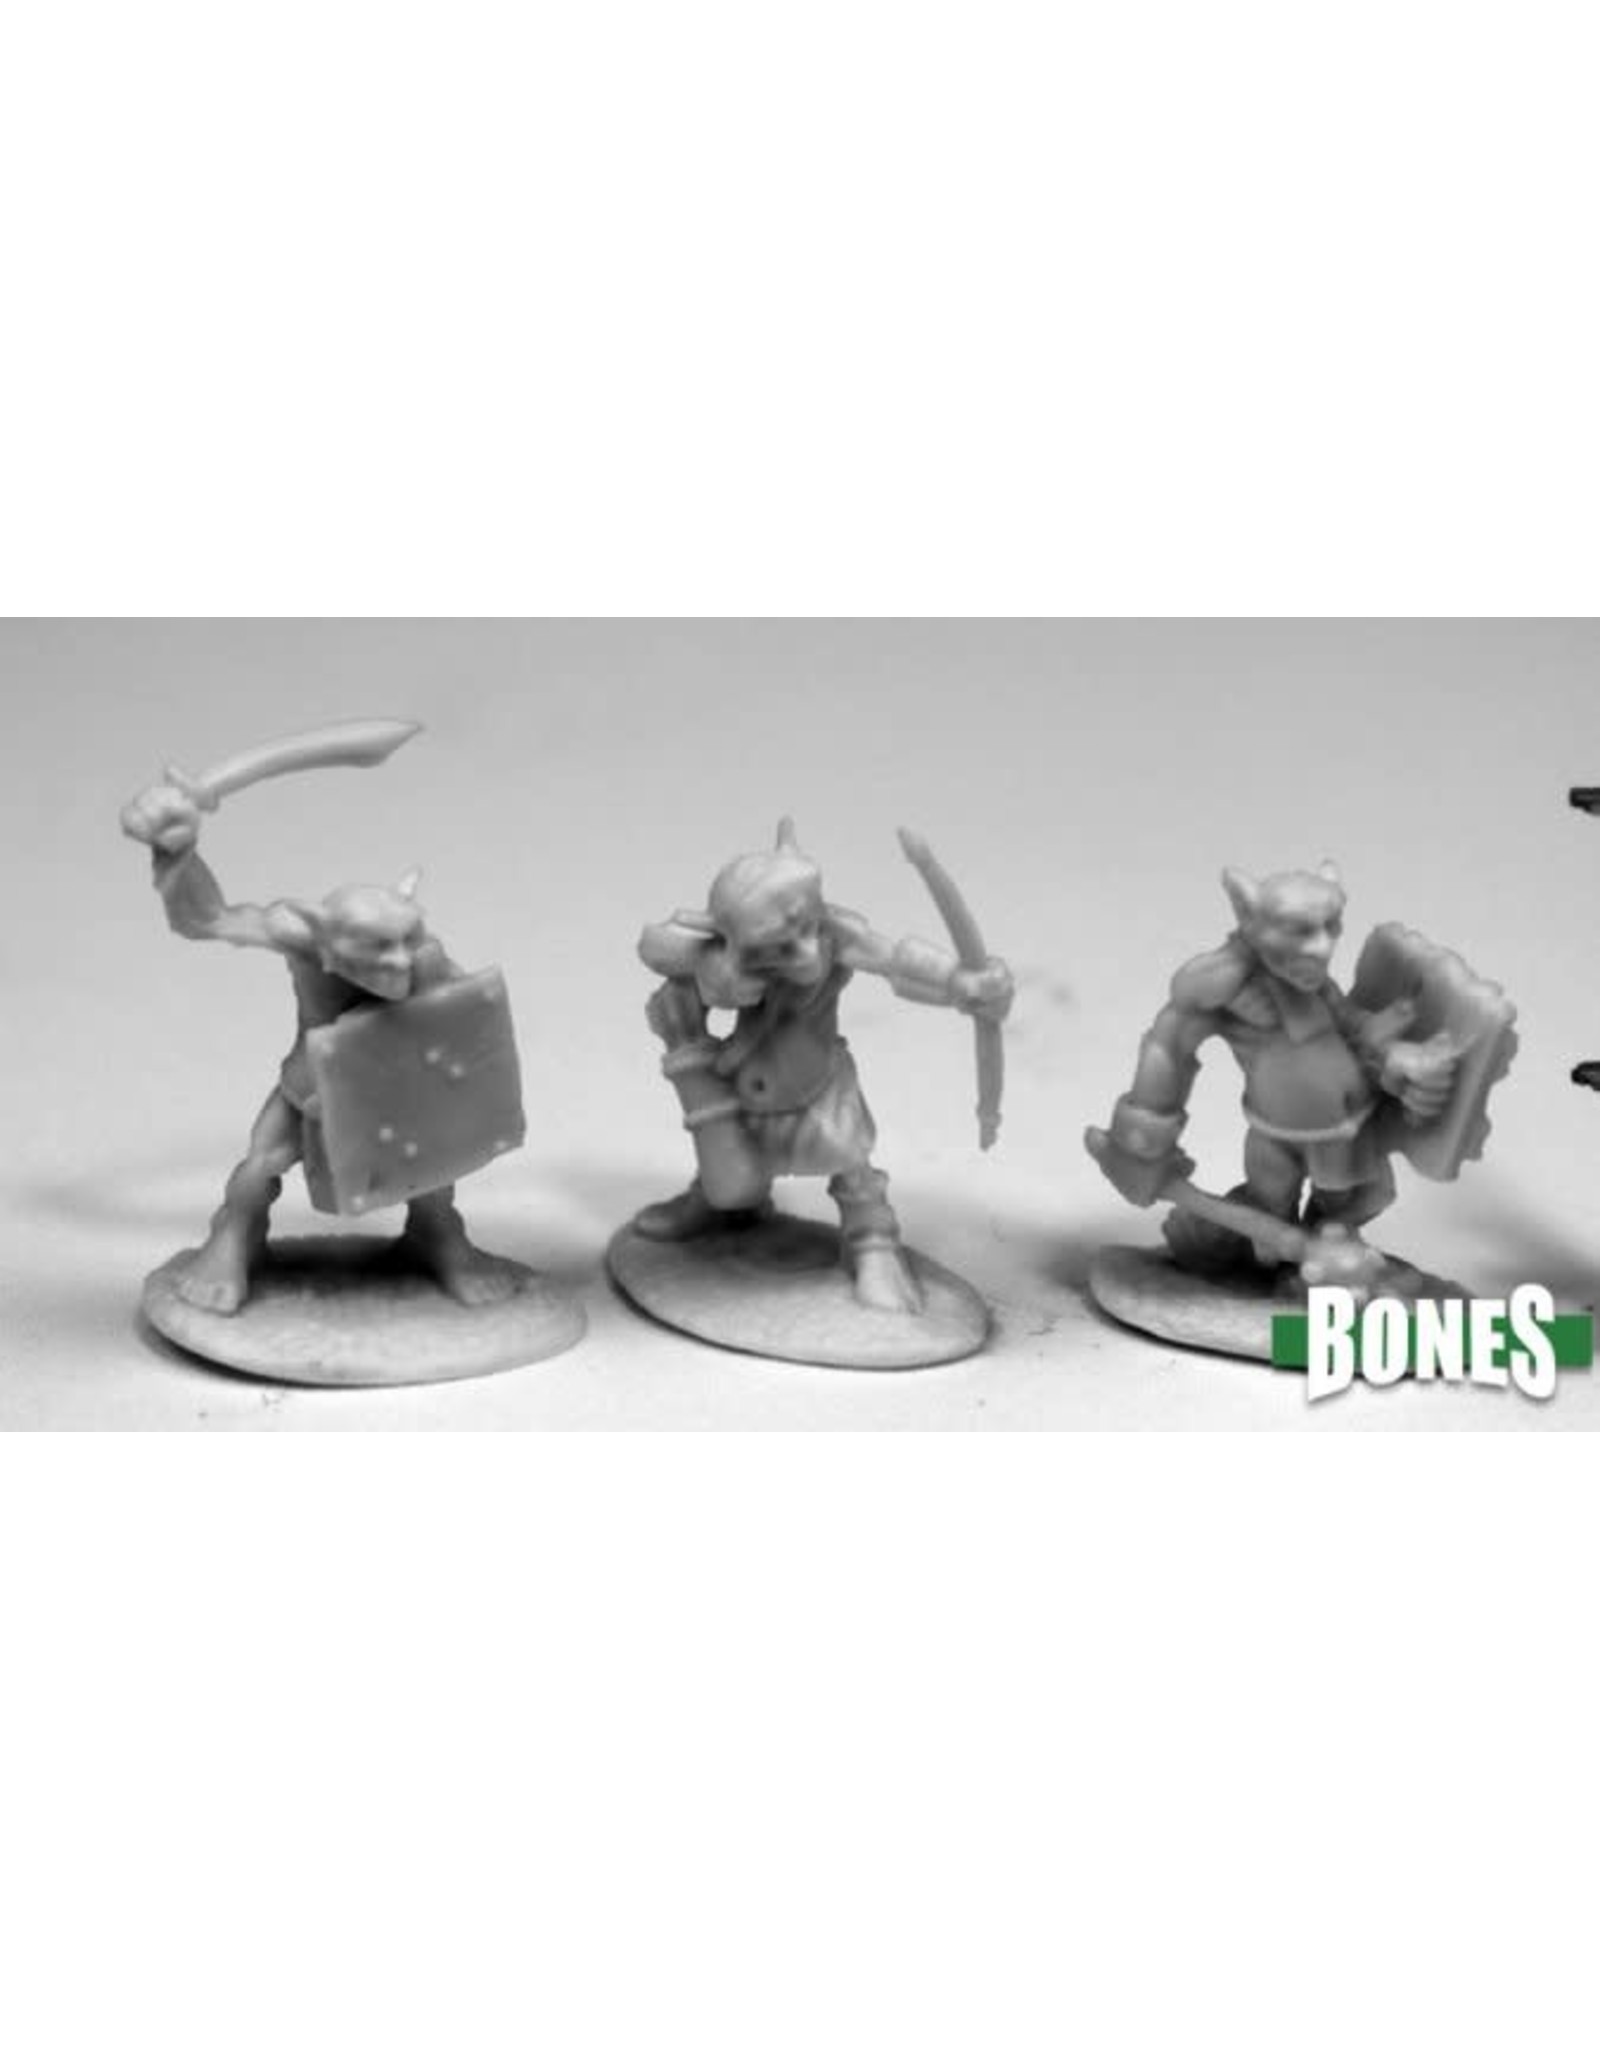 Reaper Miniatures Bones Goblin Skirmishers (6)